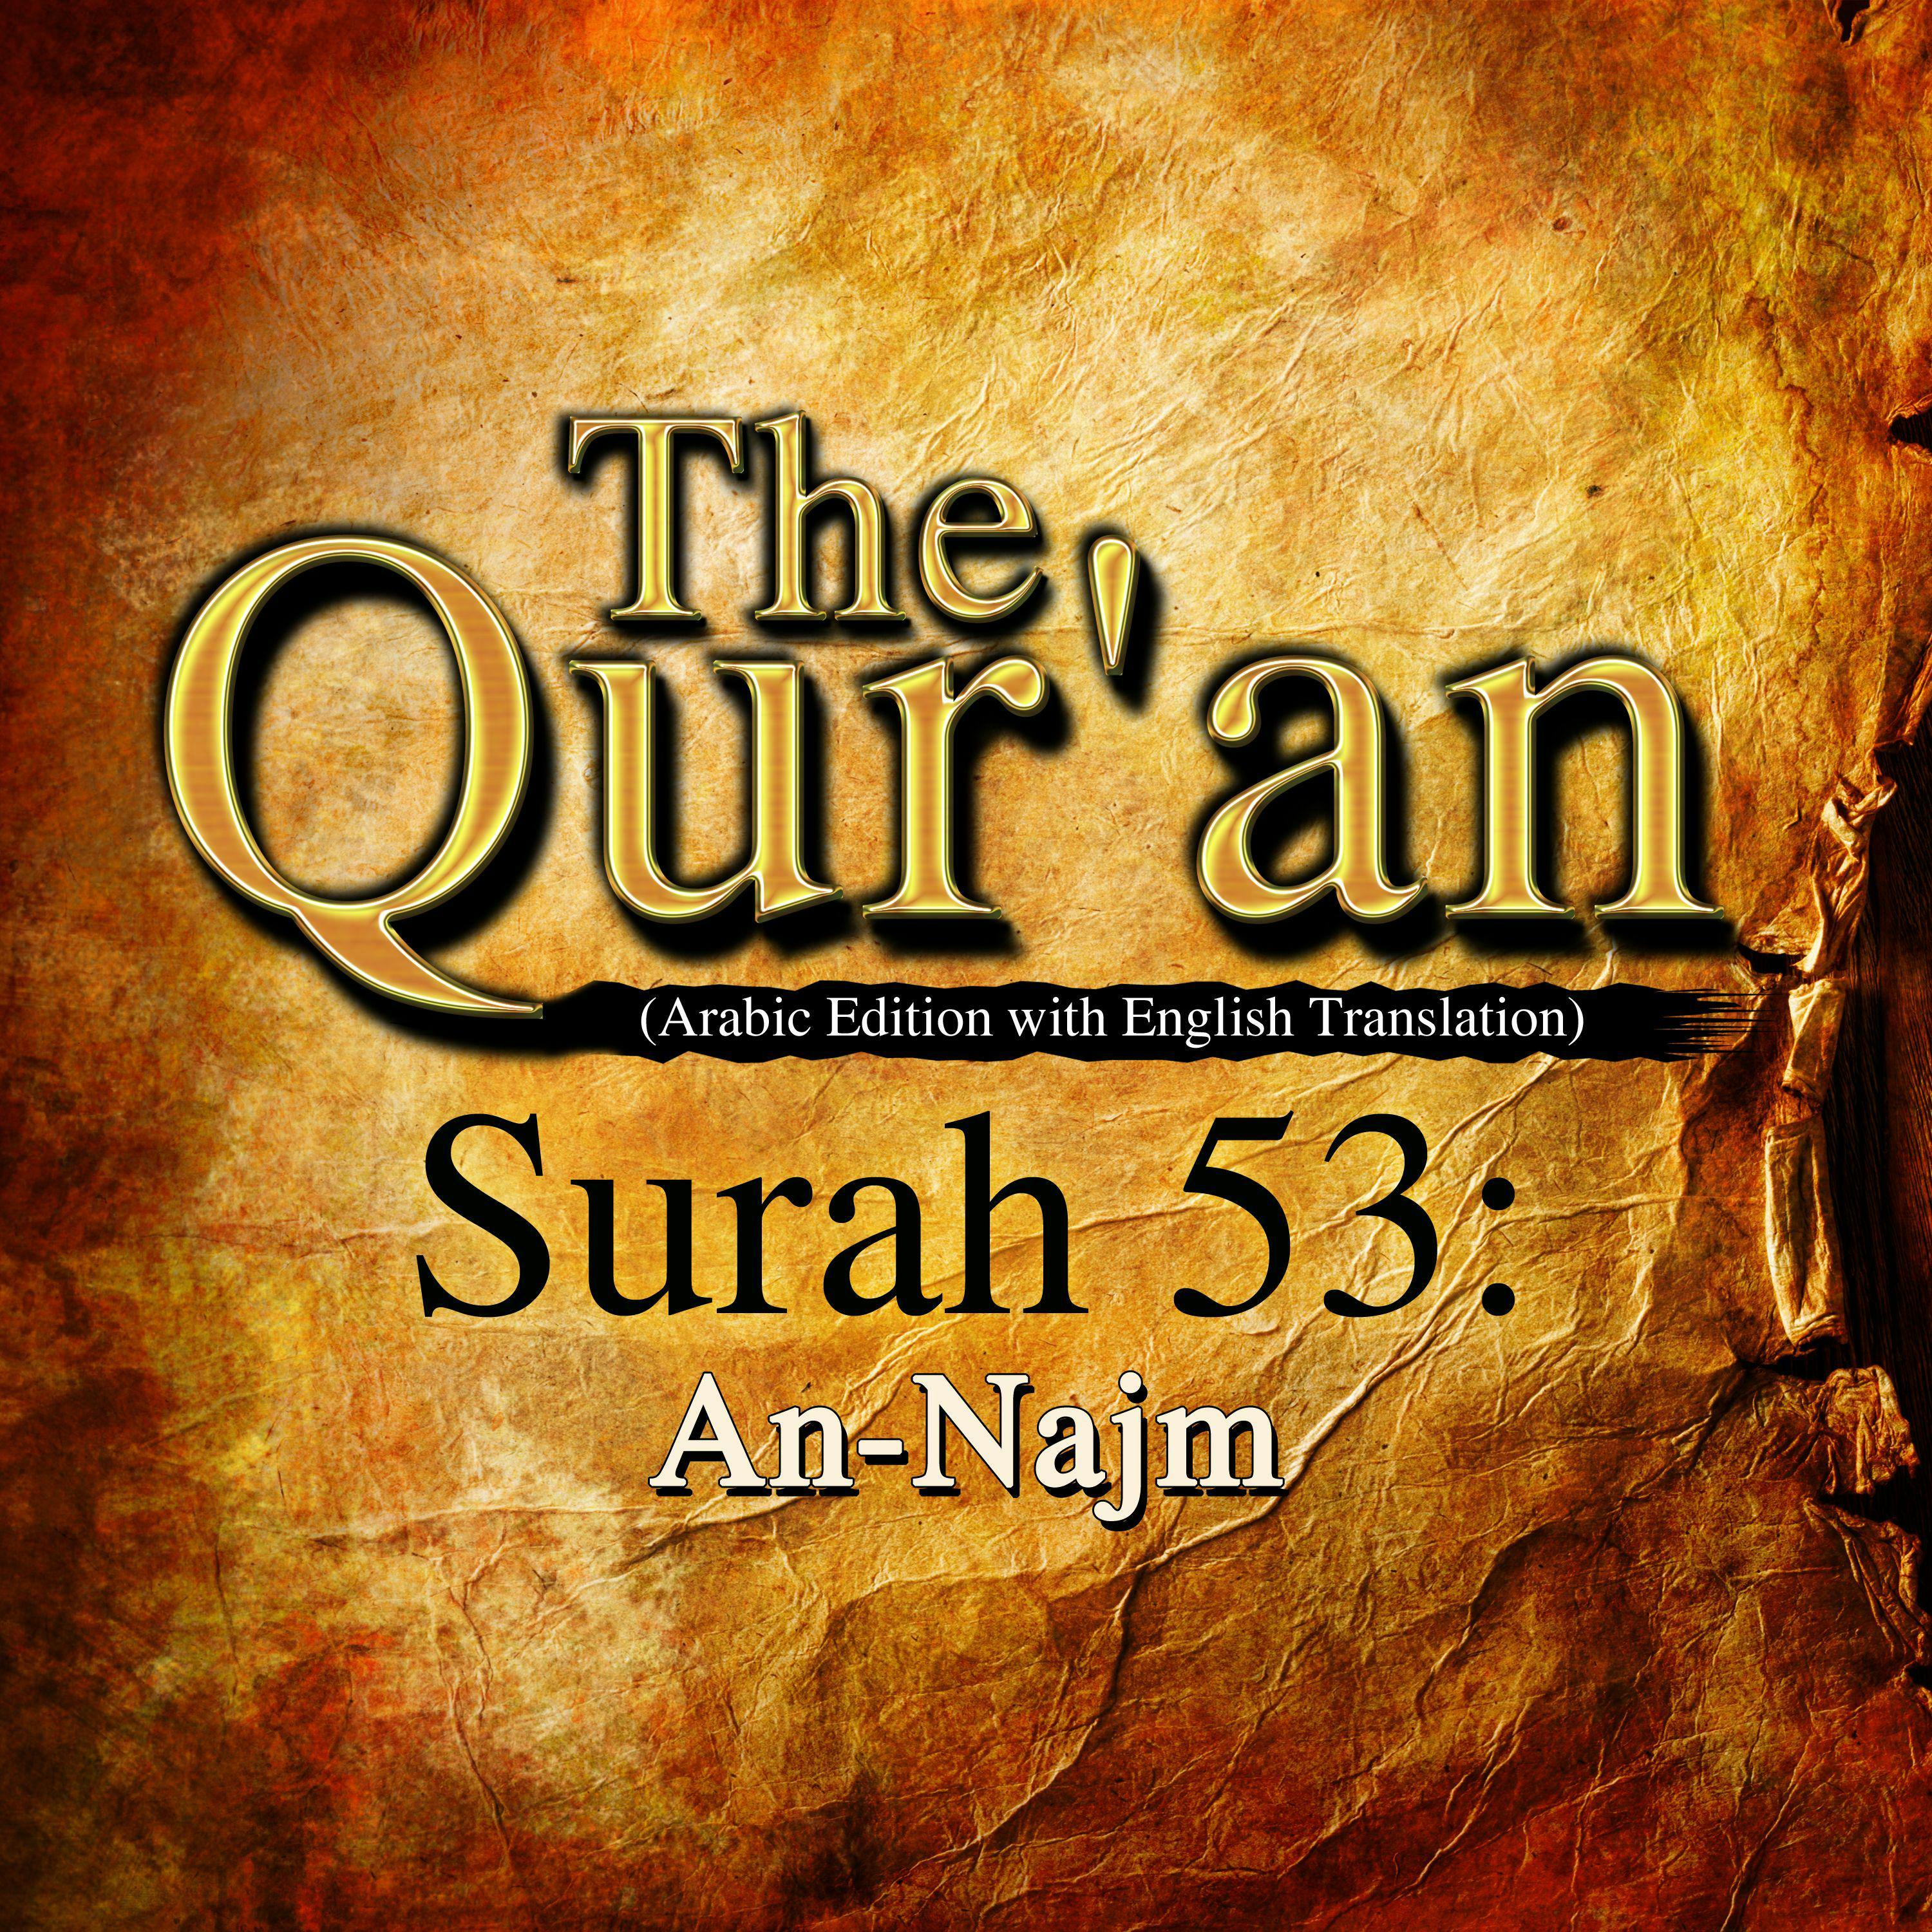 The Qur'an: Surah 53: An-Najm - One Media iP LTD